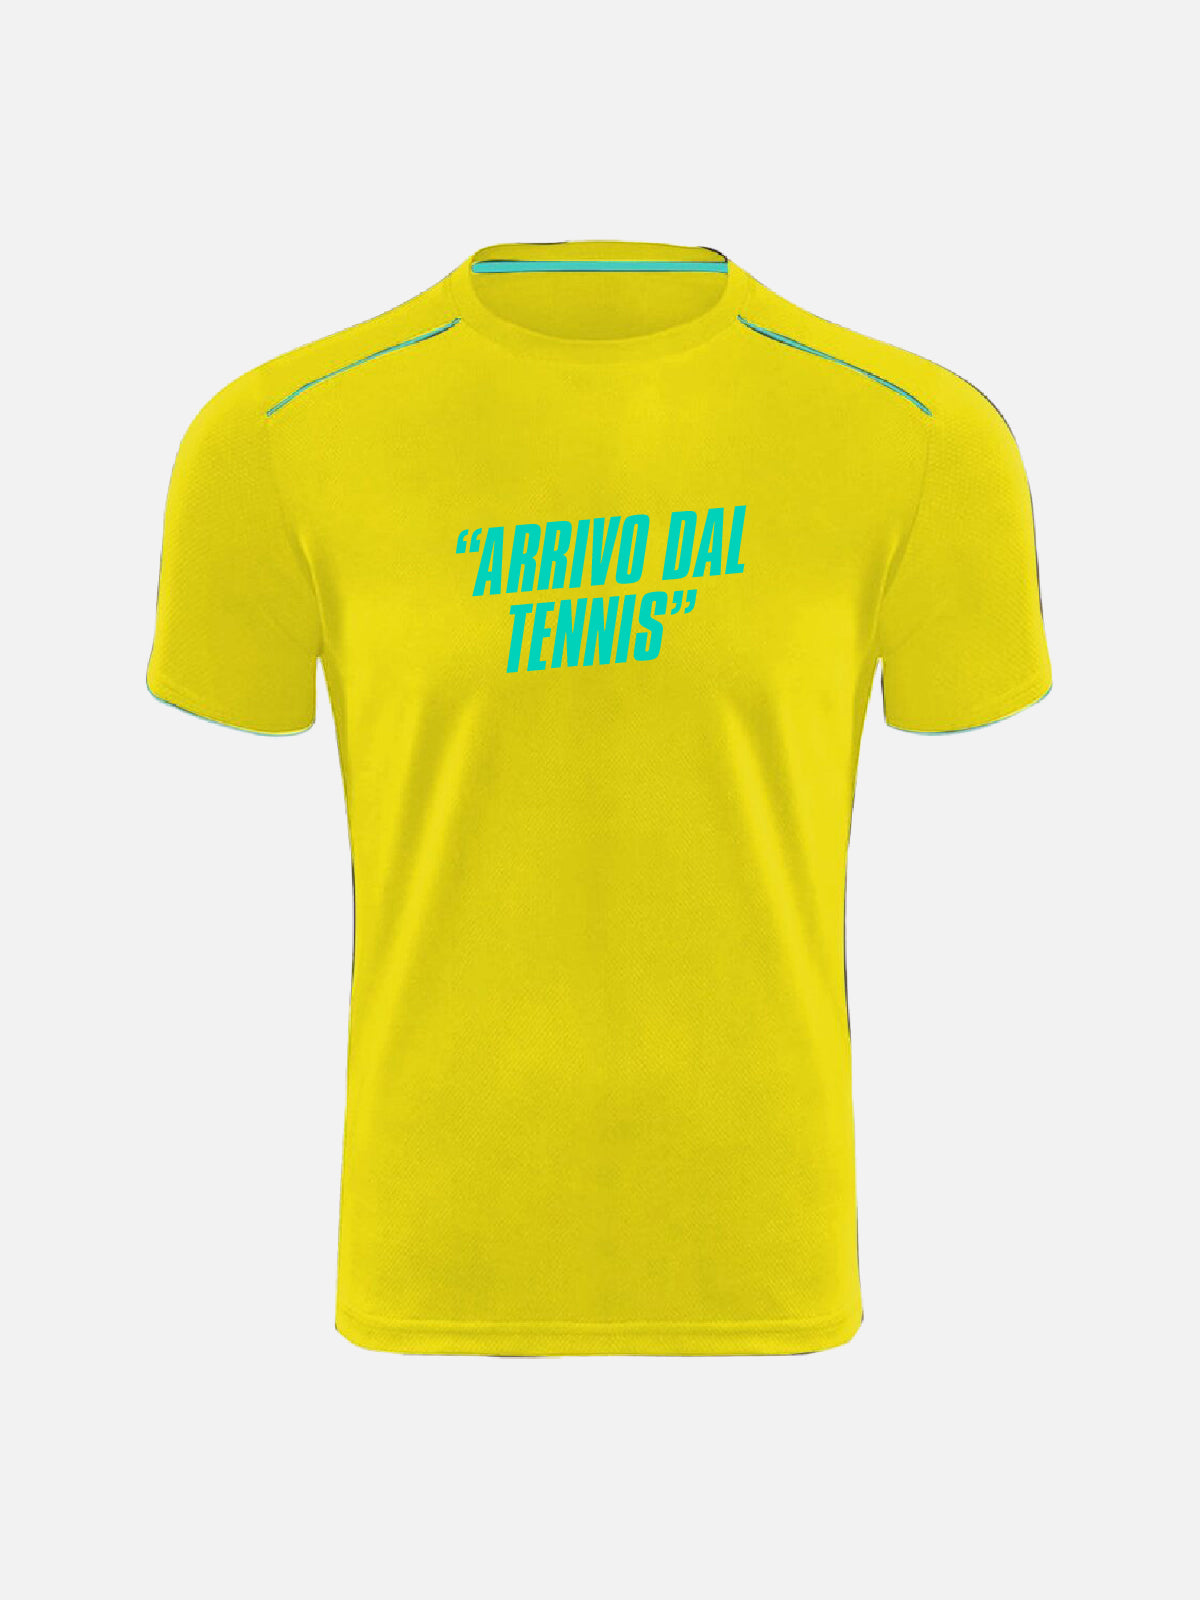 T-shirt Personalizzata - "Arrivo Dal Tennis"